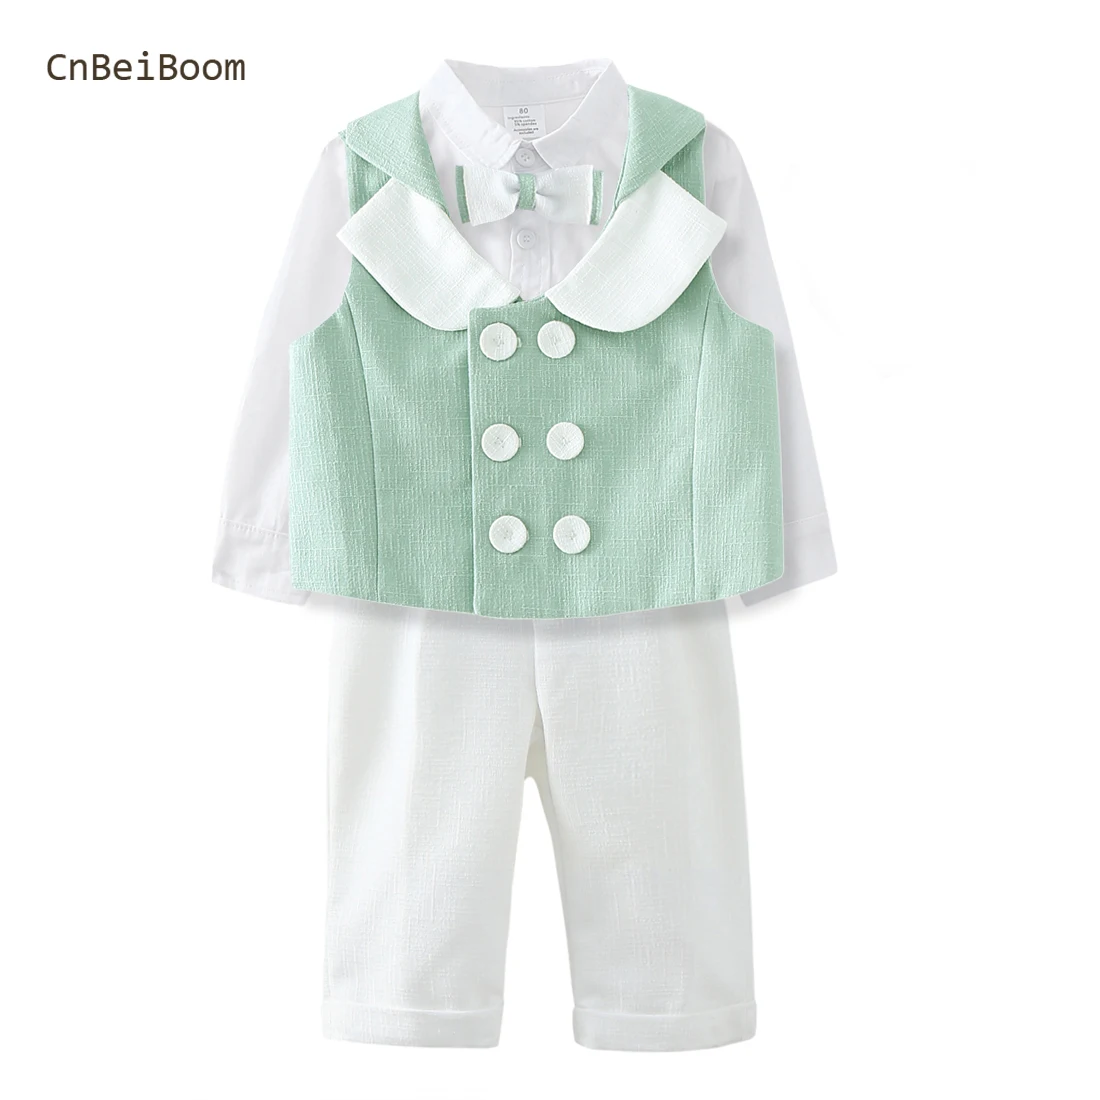 CNBeiBoom Originate Boys Waistcoat Green white Clothes Sets Kids Vest Tie Shirt Strap Trousers Children Suits Gentleman Dress 1